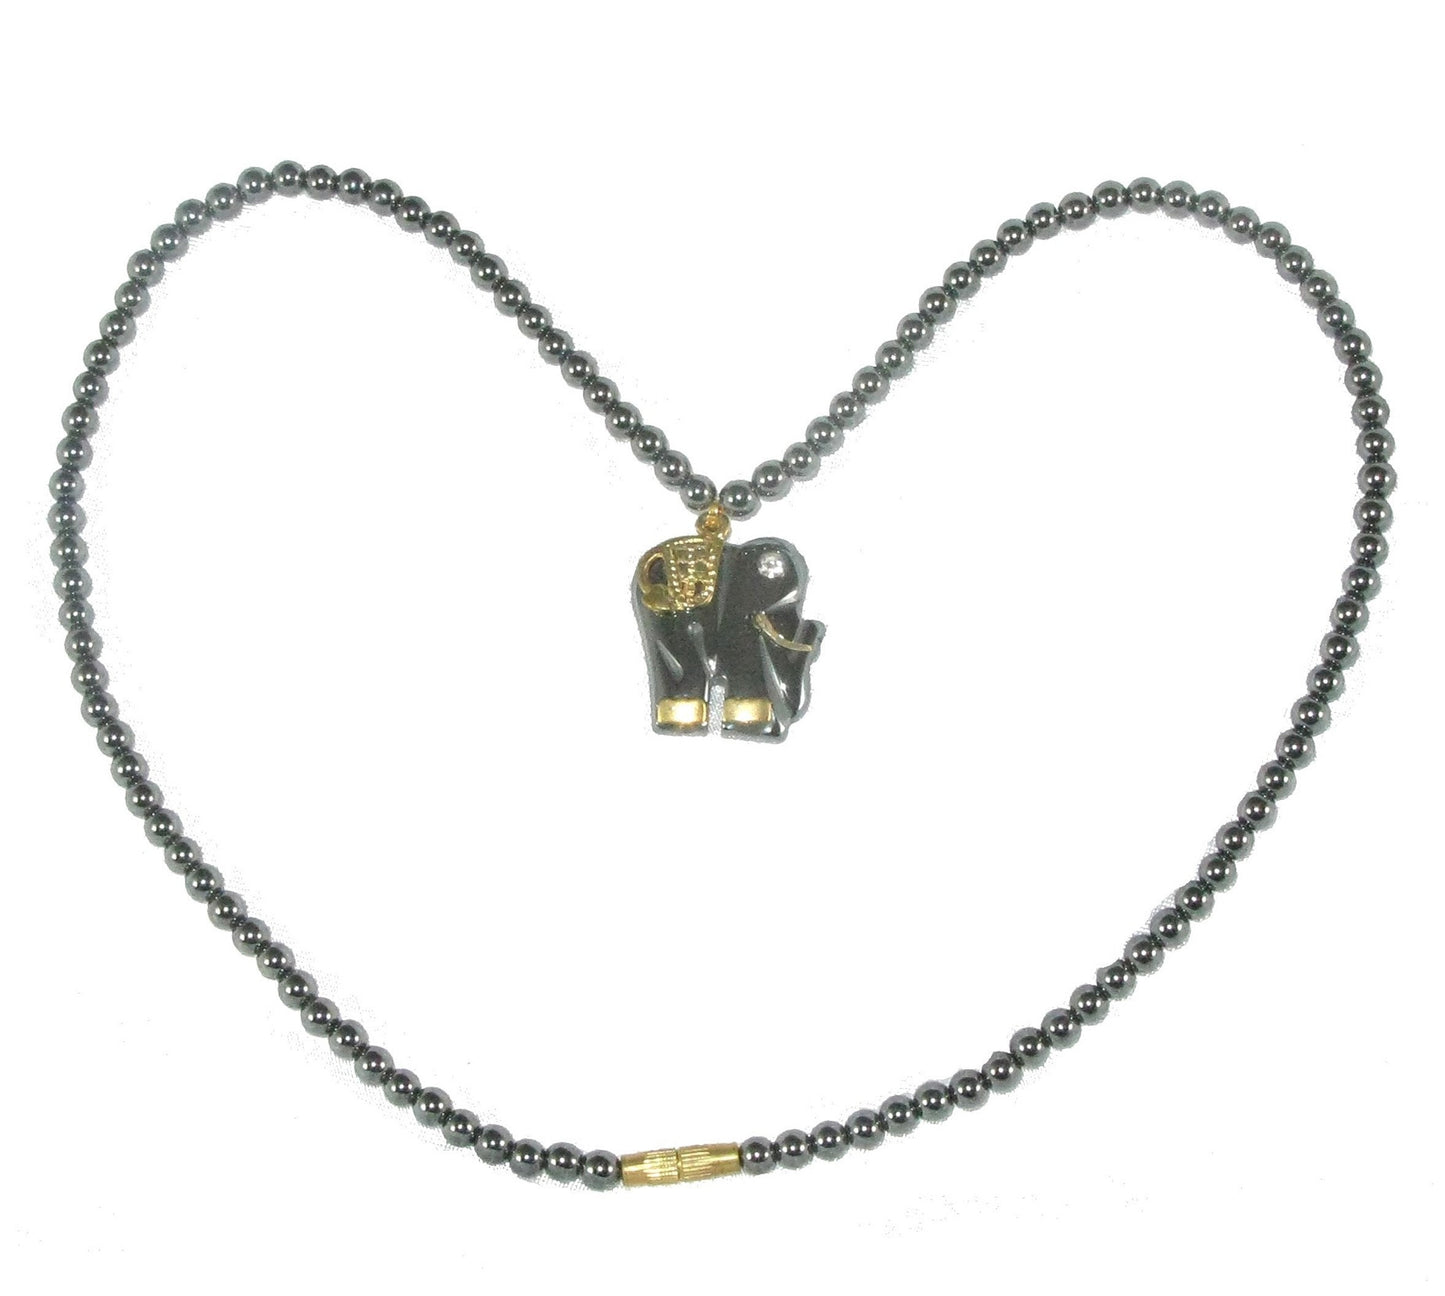 Hematite Healing Energy Anti-Stress Necklace 18" / 45 cm Indian Elephant Jewelled Pendant Handmade + Presentation Pouch & Storycard